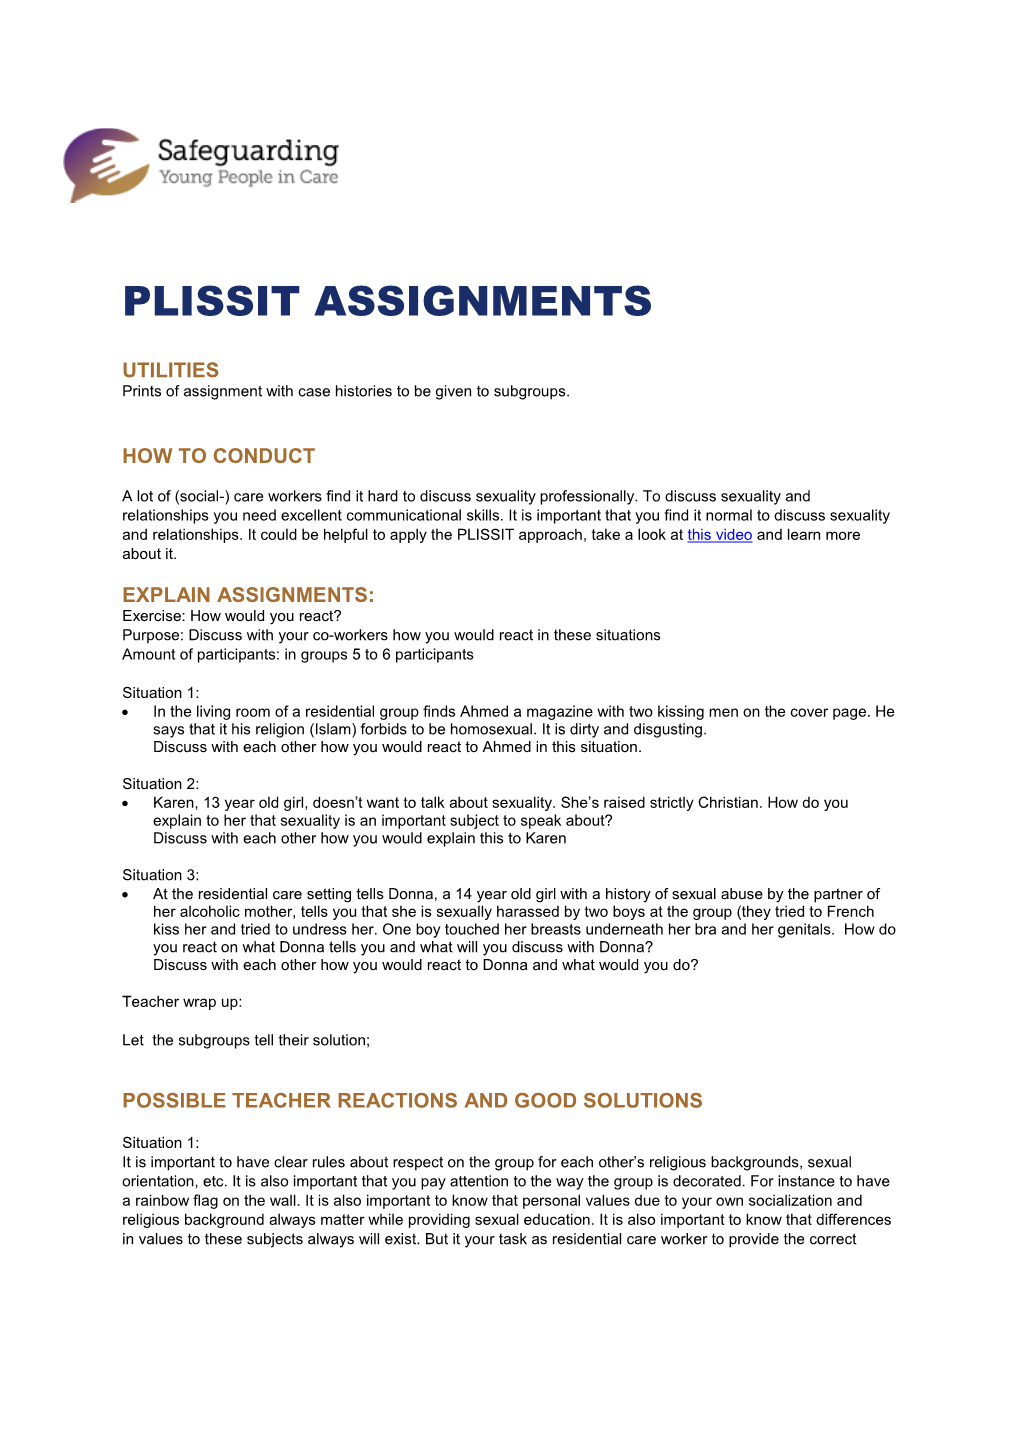 PLISSIT Model